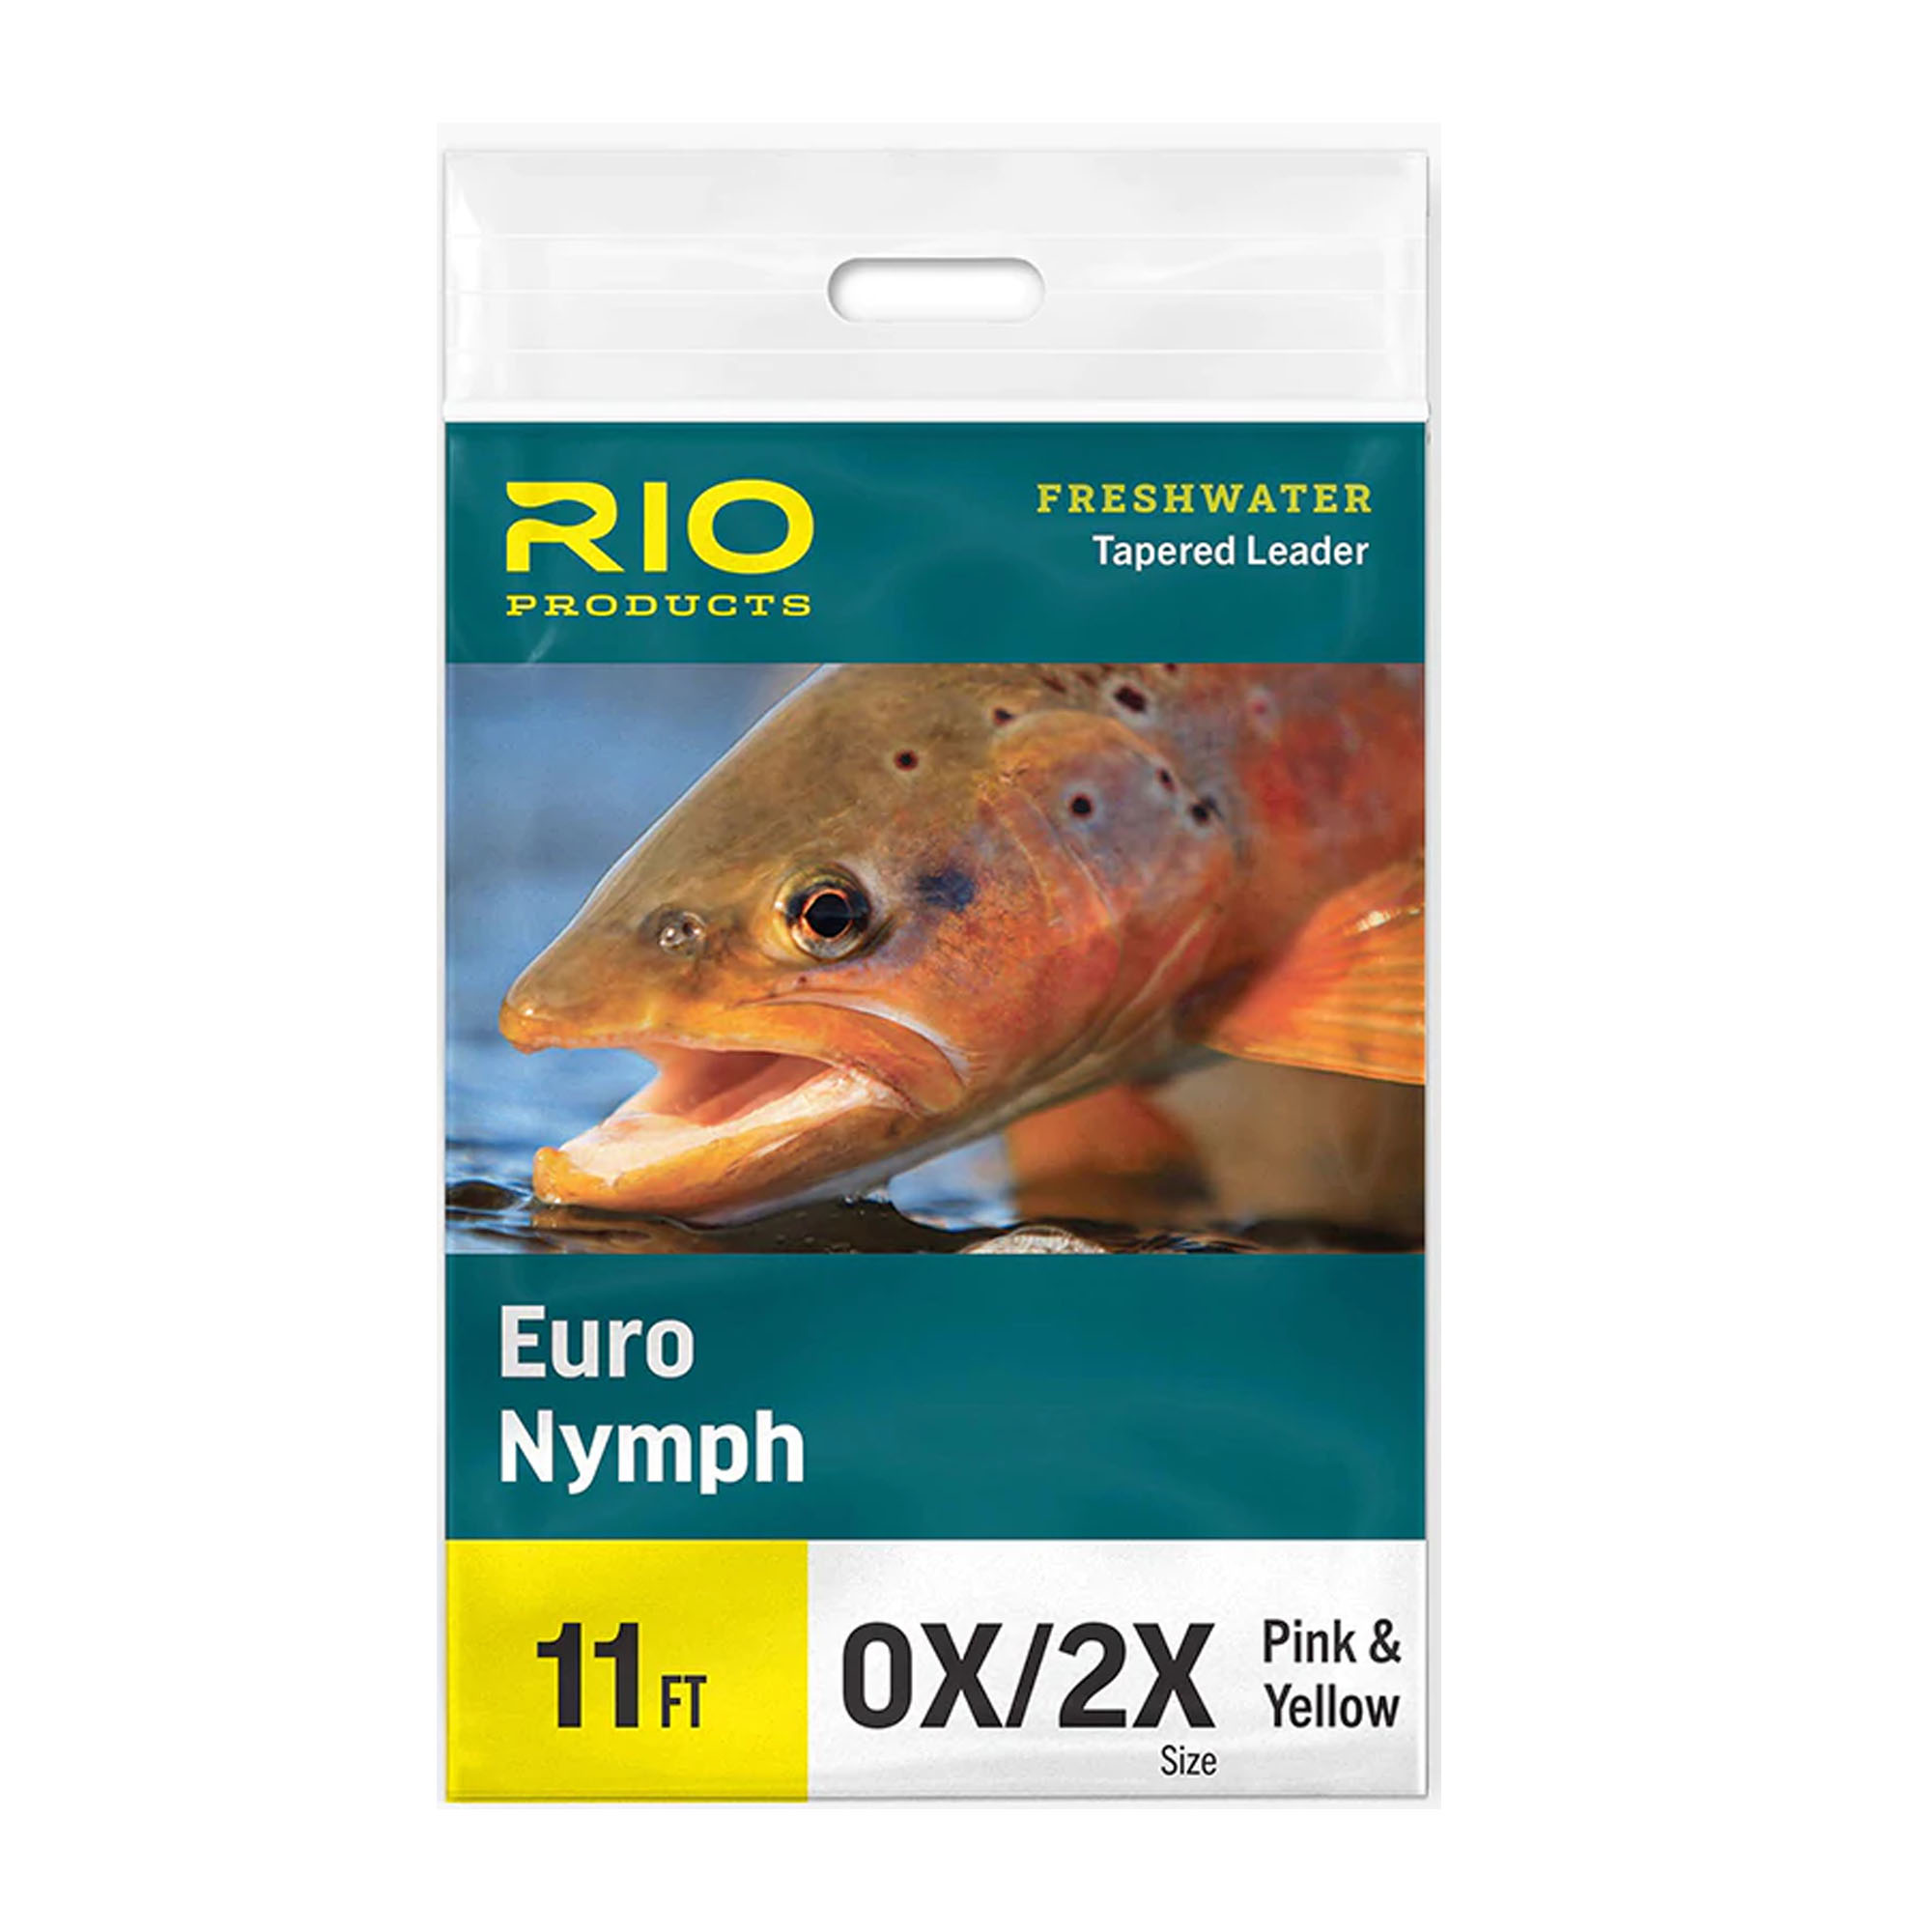 RIO Euro Nymph Leader – Guide Flyfishing